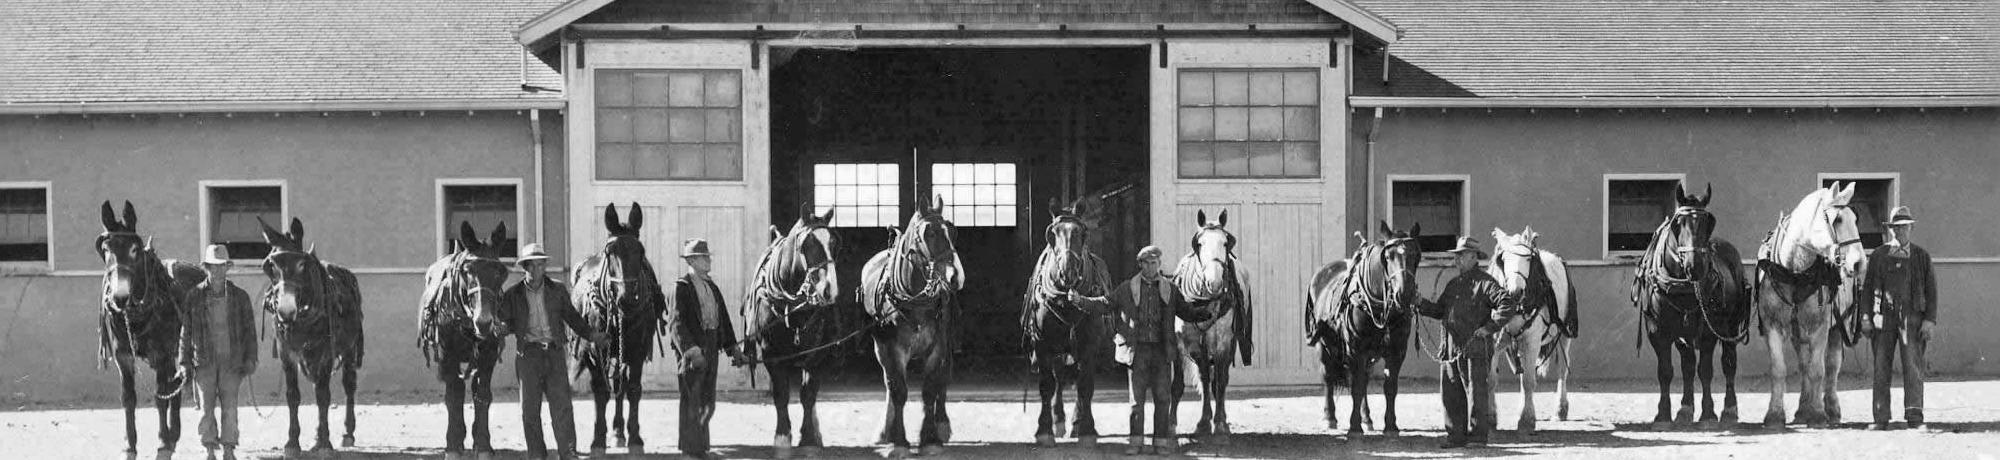 Horse Barn 1920s